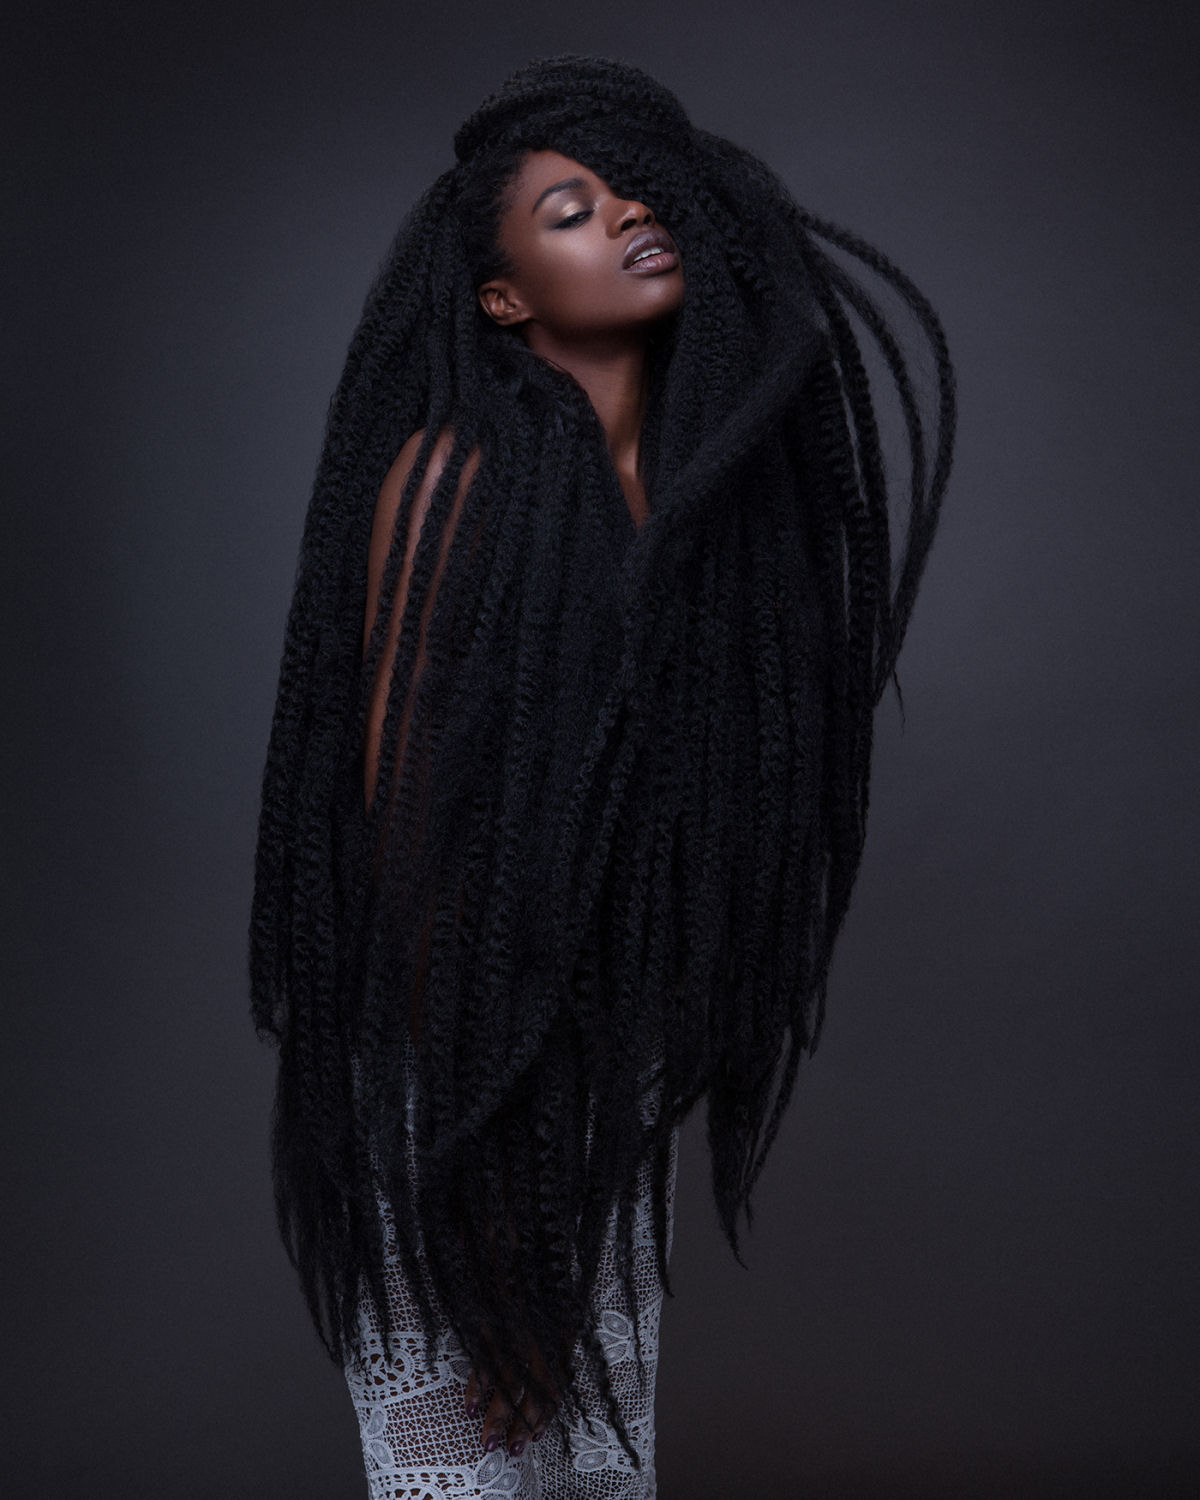 A beleza futurista desta série de penteados afros é um luxo só 14